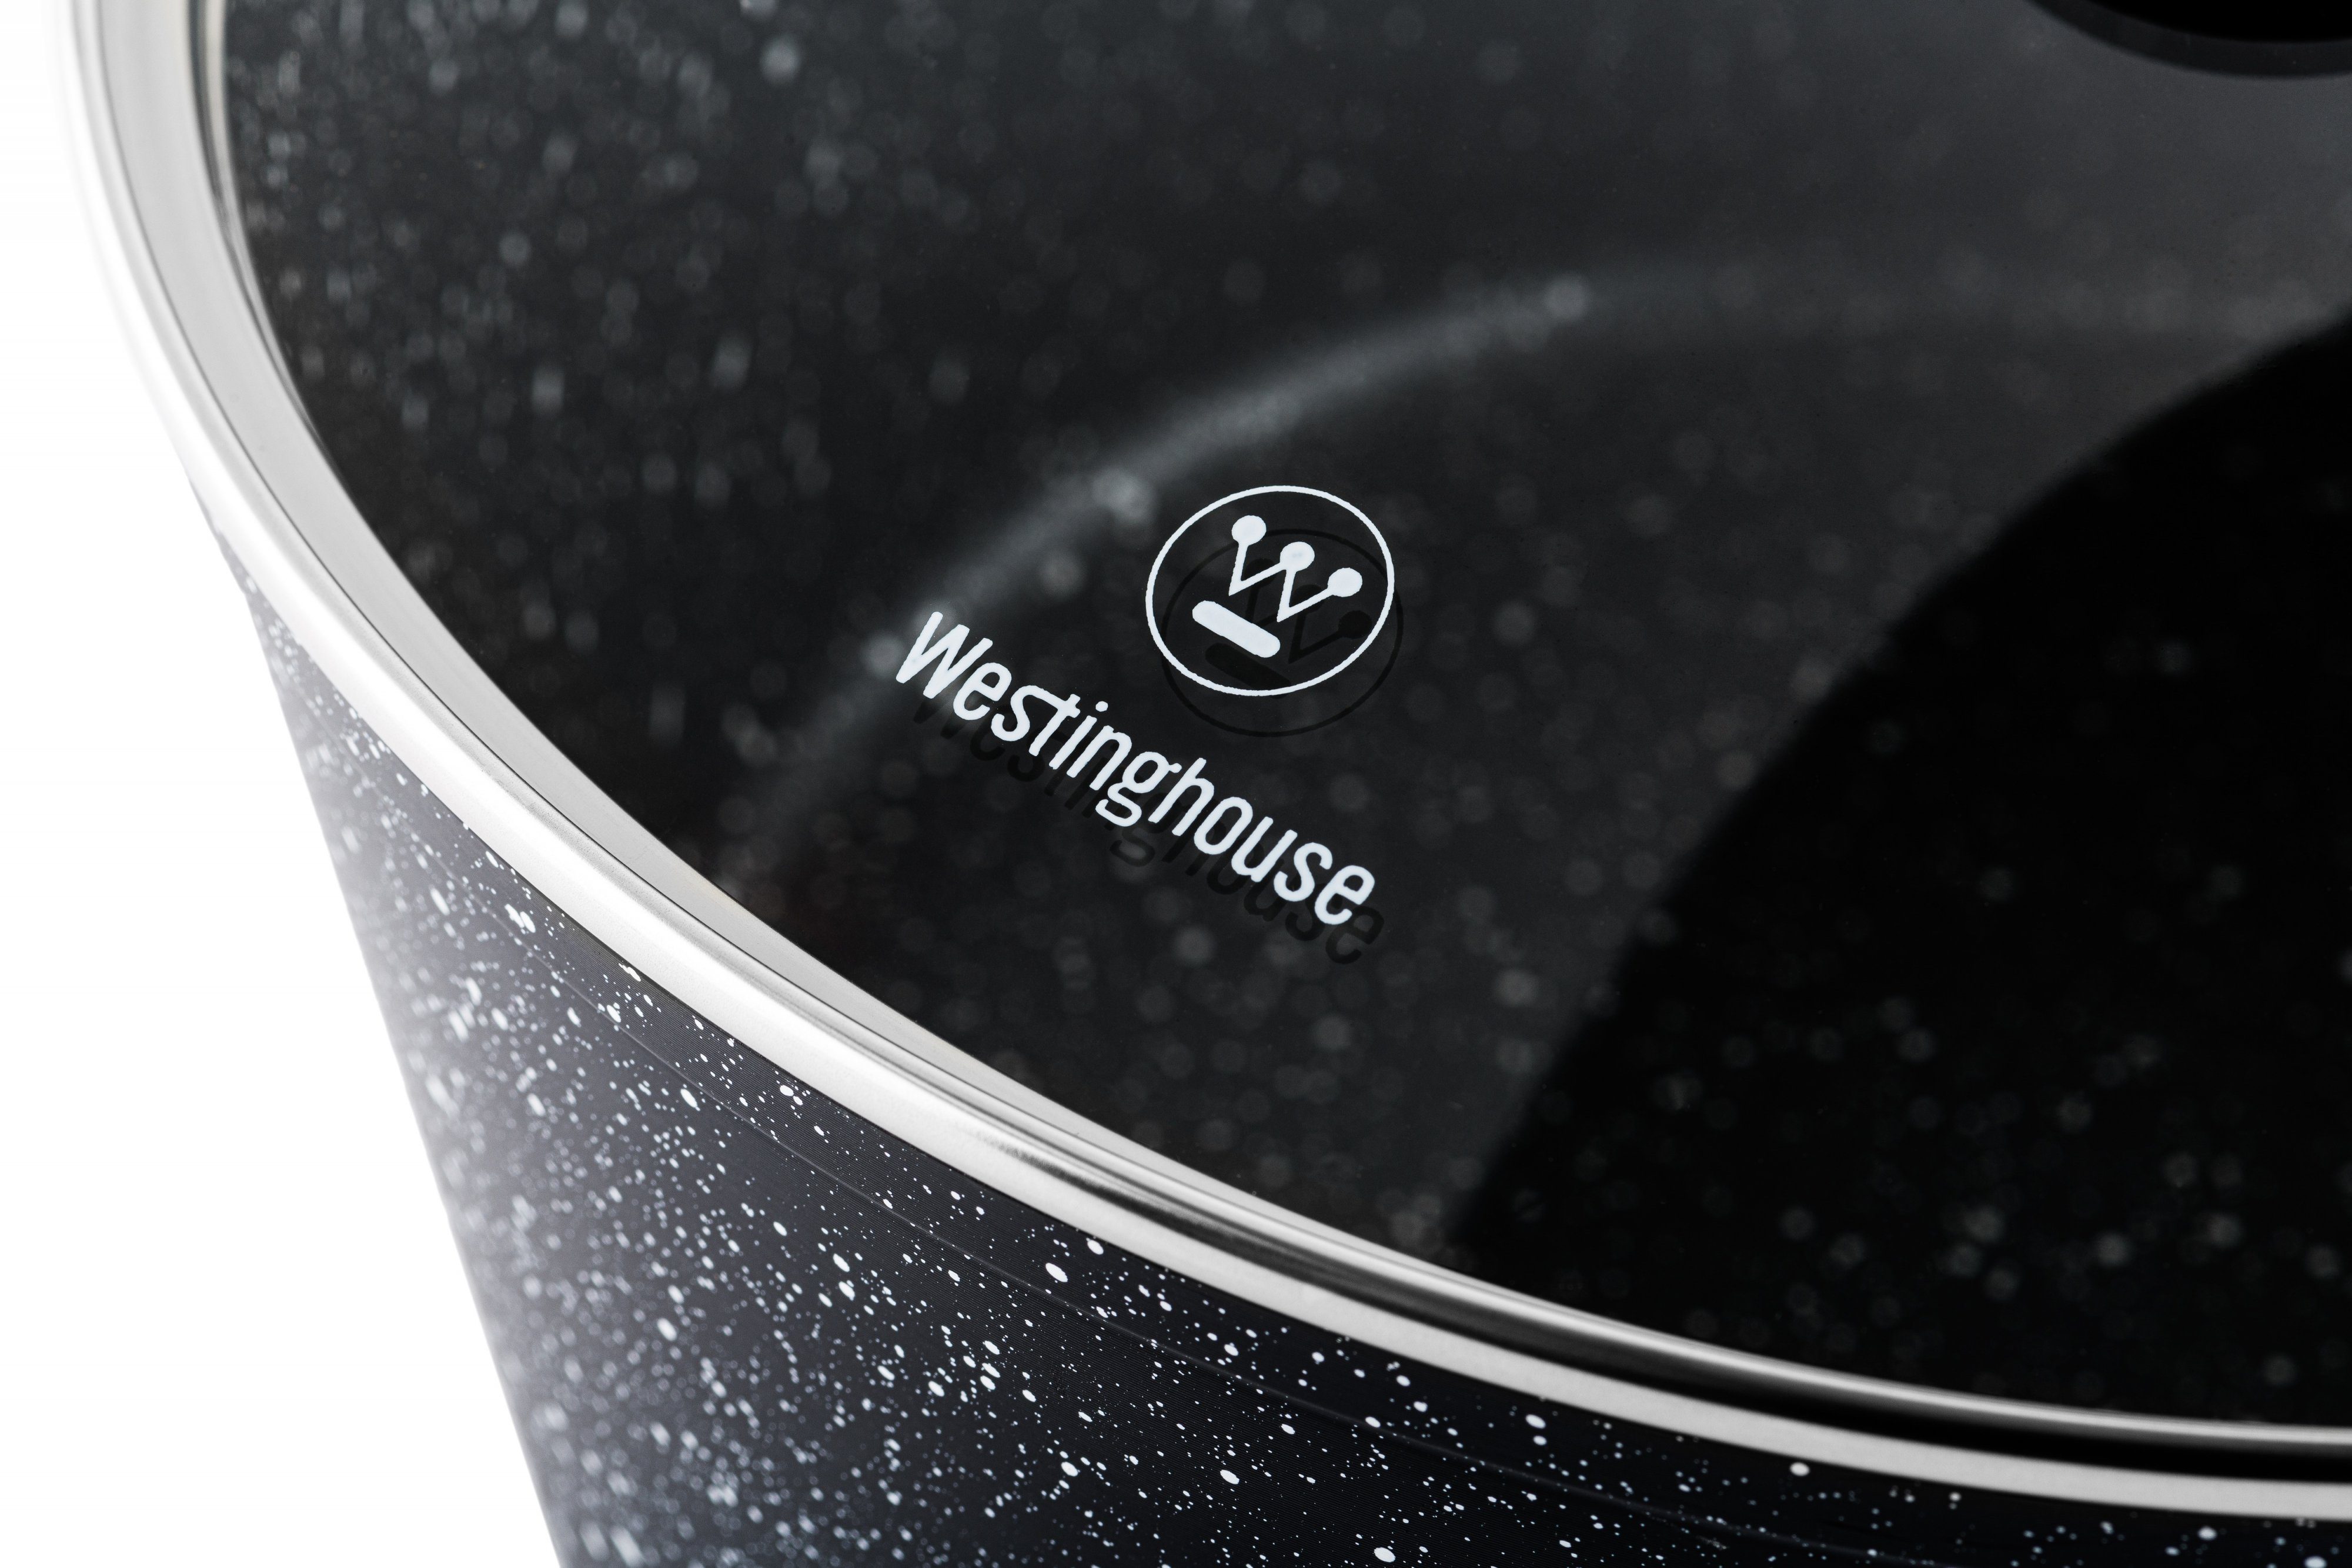 Westinghouse Suppentopf Marble Aluminium, Induktionsgeeignet Black Griff Spülmaschinenfest, Ergonomischer